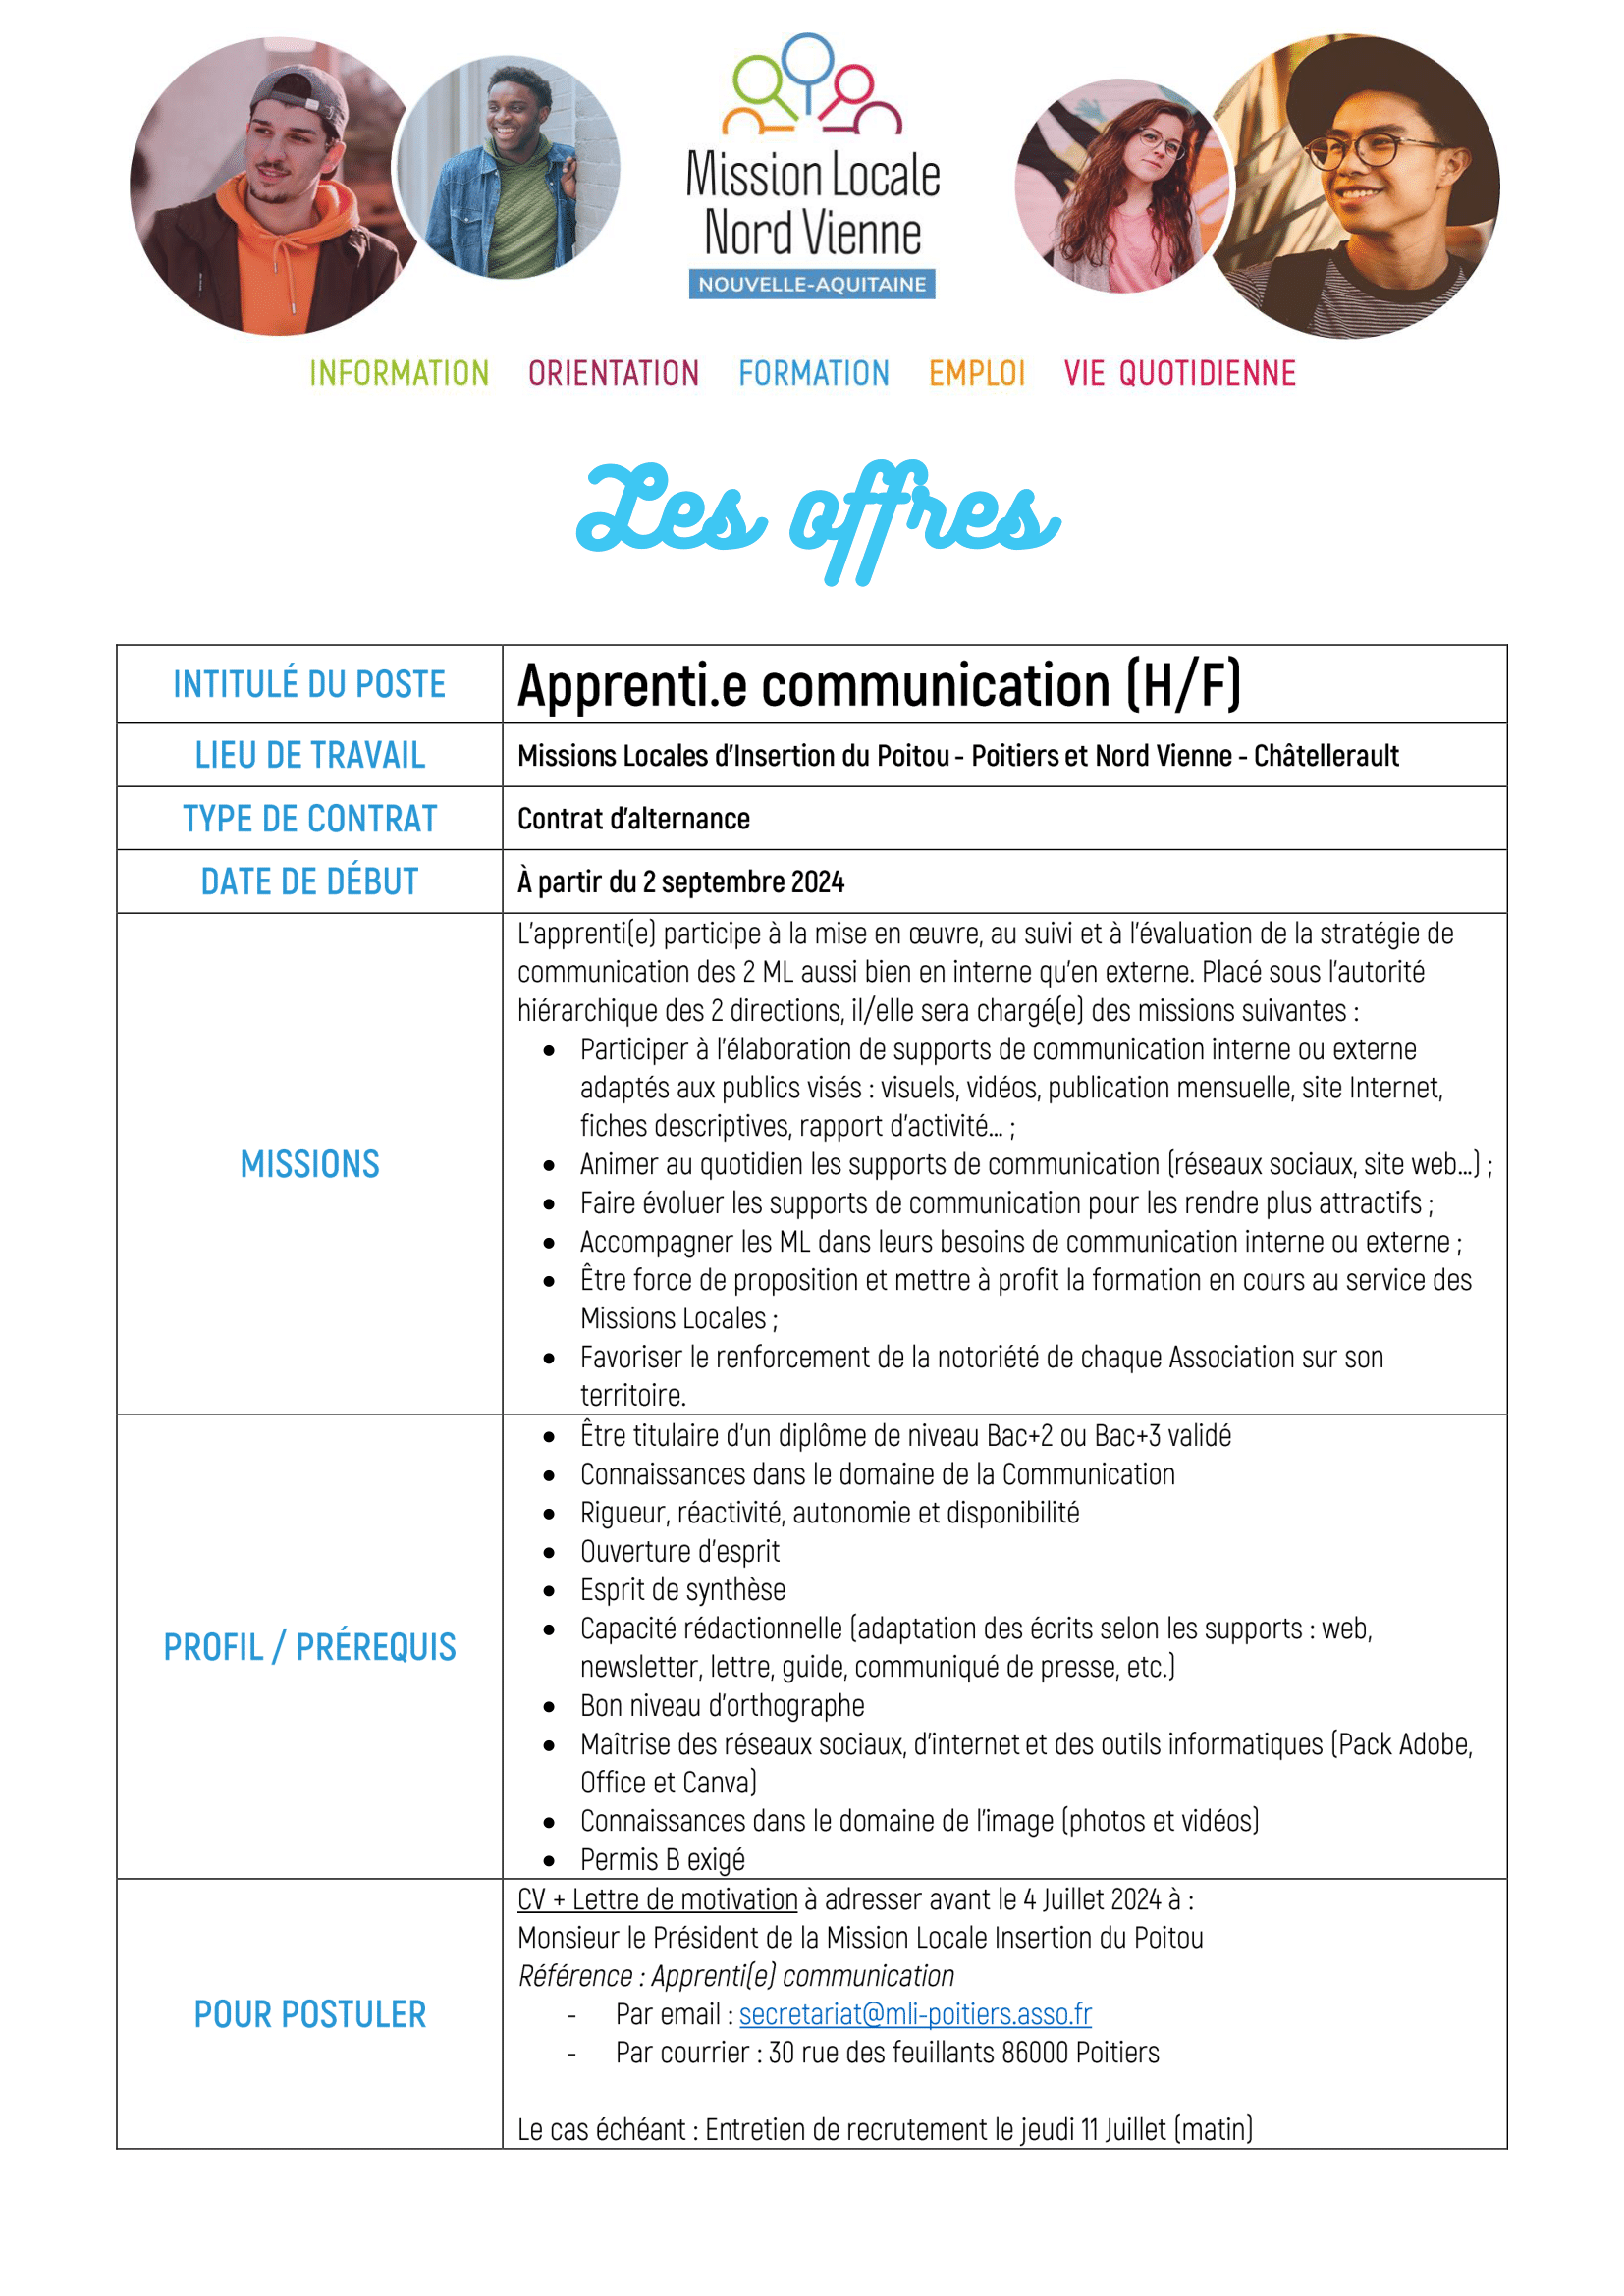 Apprenti communication (H/F)